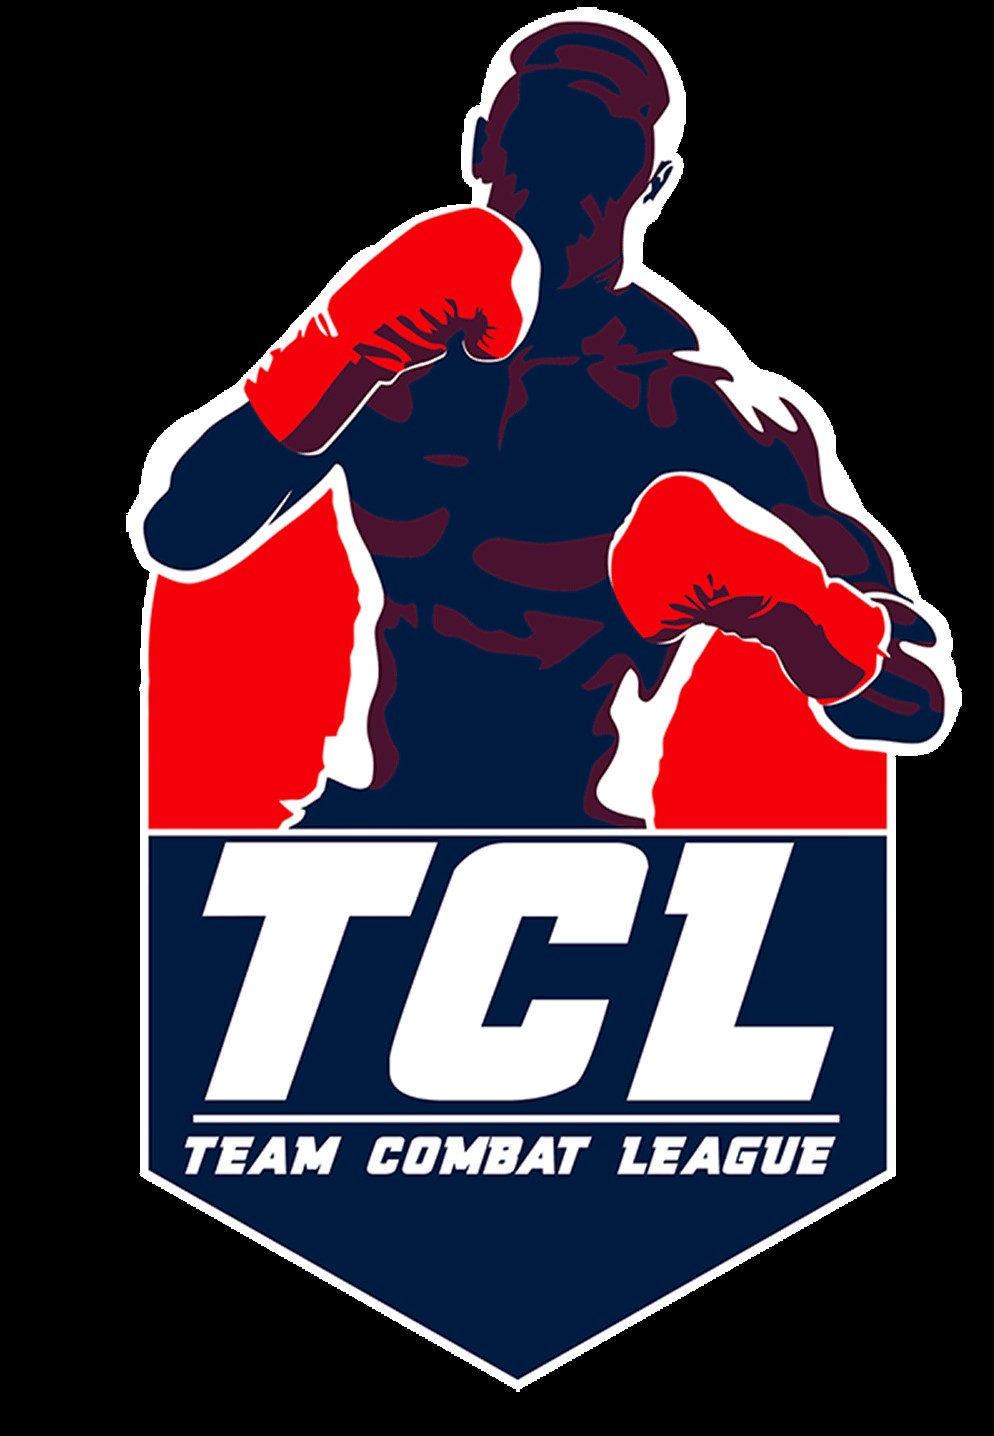 Team Combat league's second season starts this week